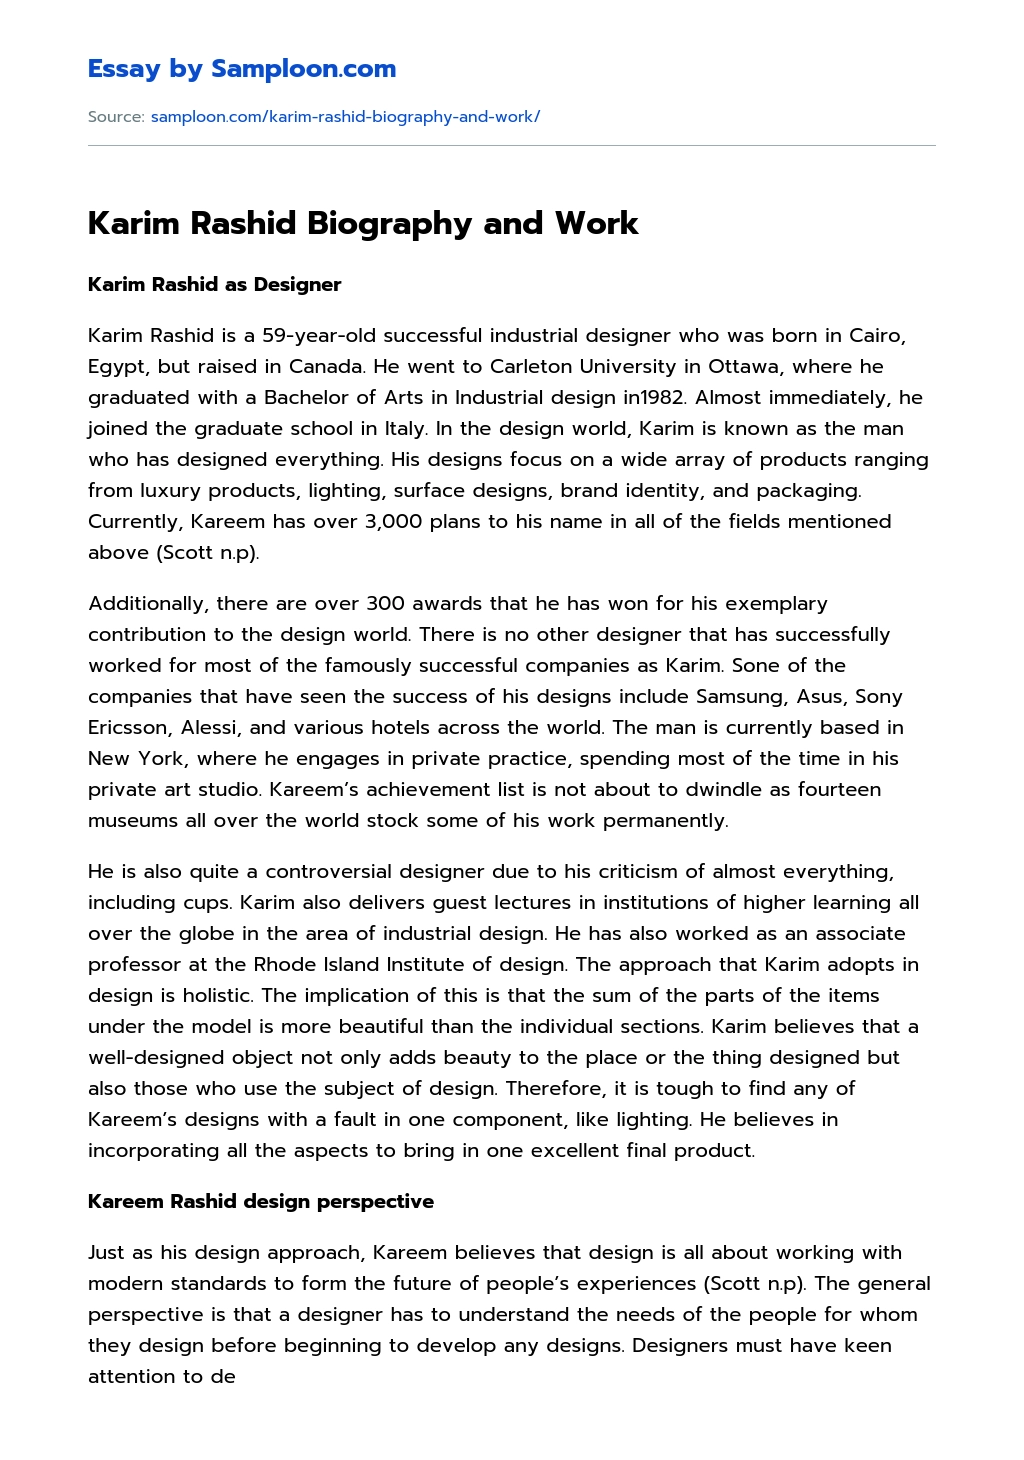 Karim Rashid Biography and Work essay